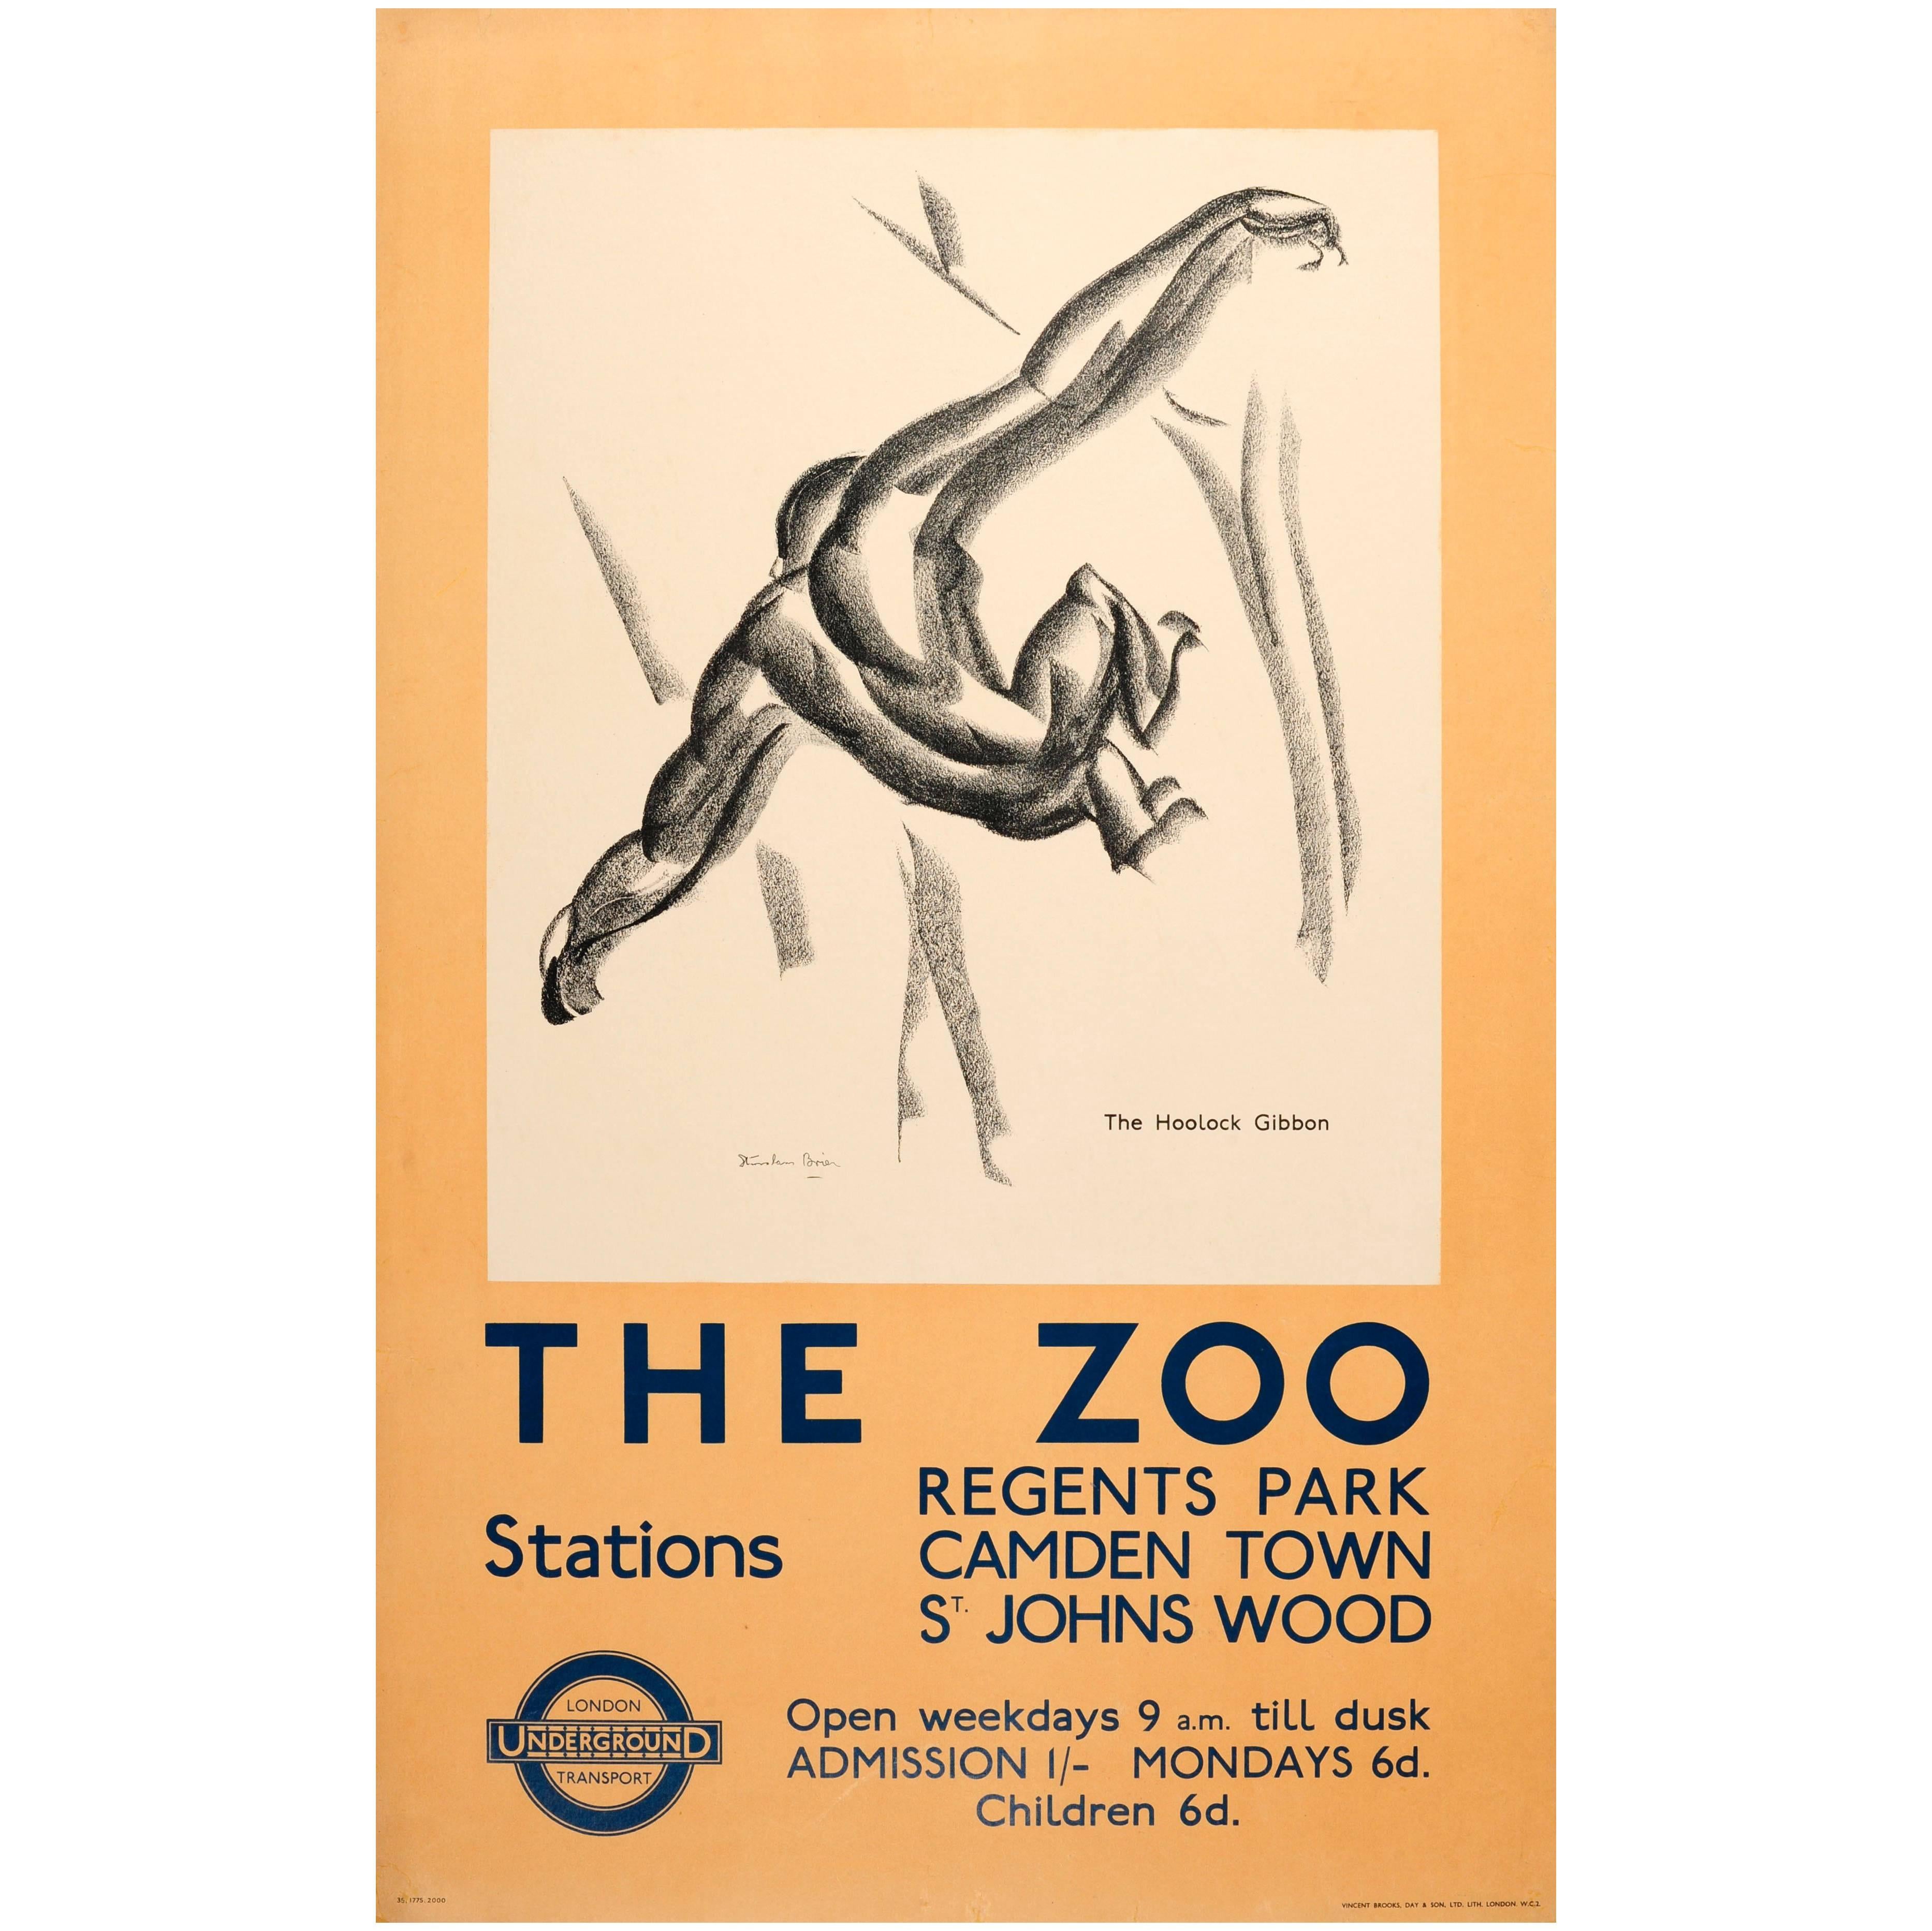 Original Vintage 1935 London Zoo Poster by Stanislaus Brien - The Hoolock Gibbon